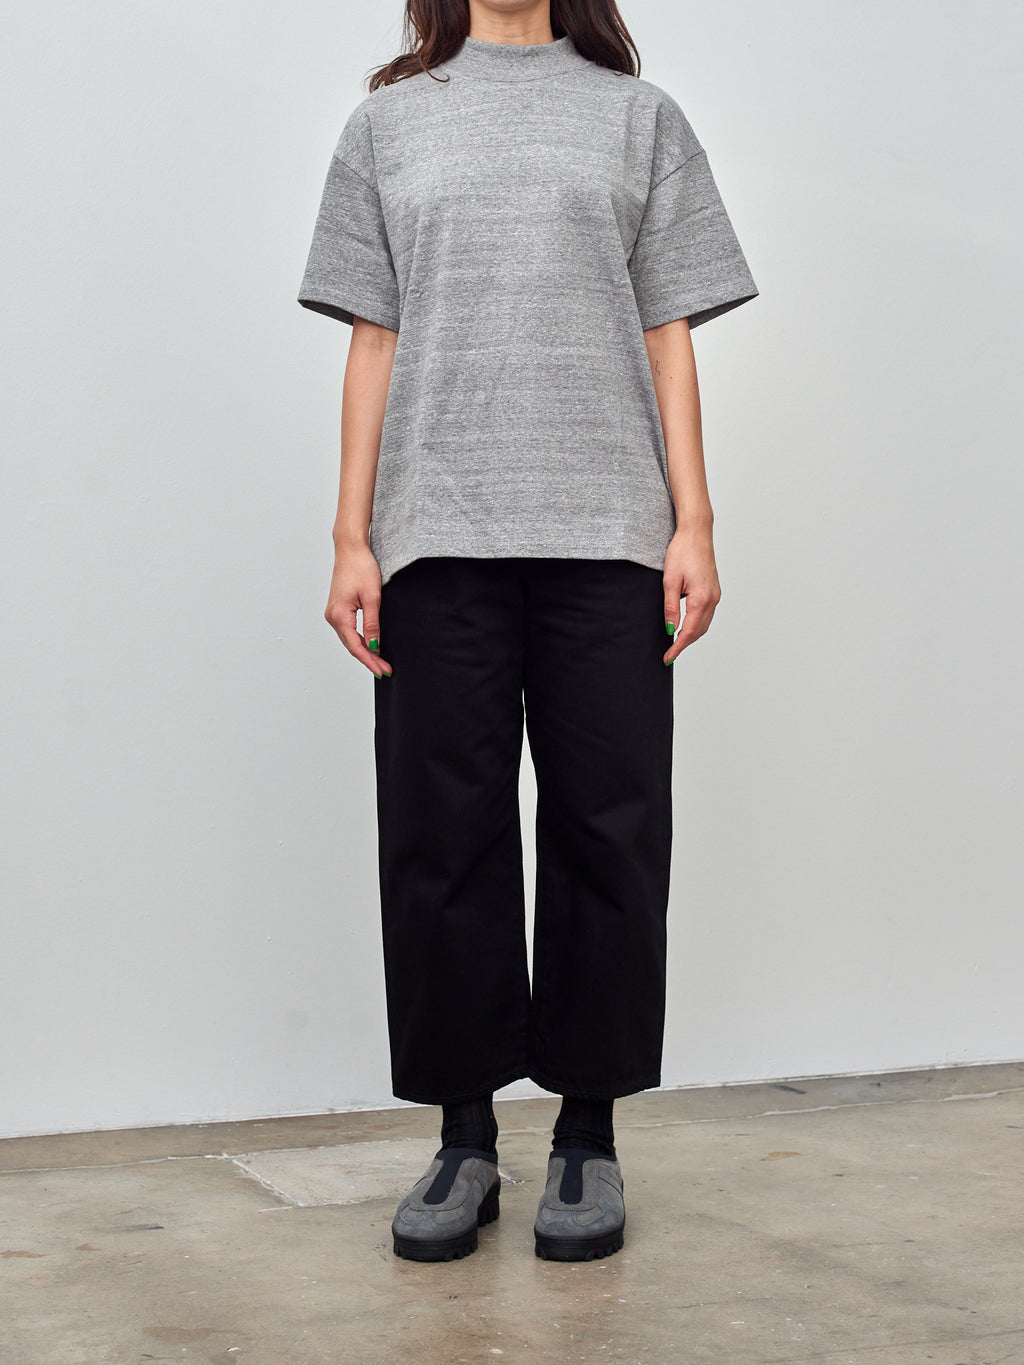 Namu Shop - Yoko Sakamoto Mock Neck T-Shirt - Heather Gray